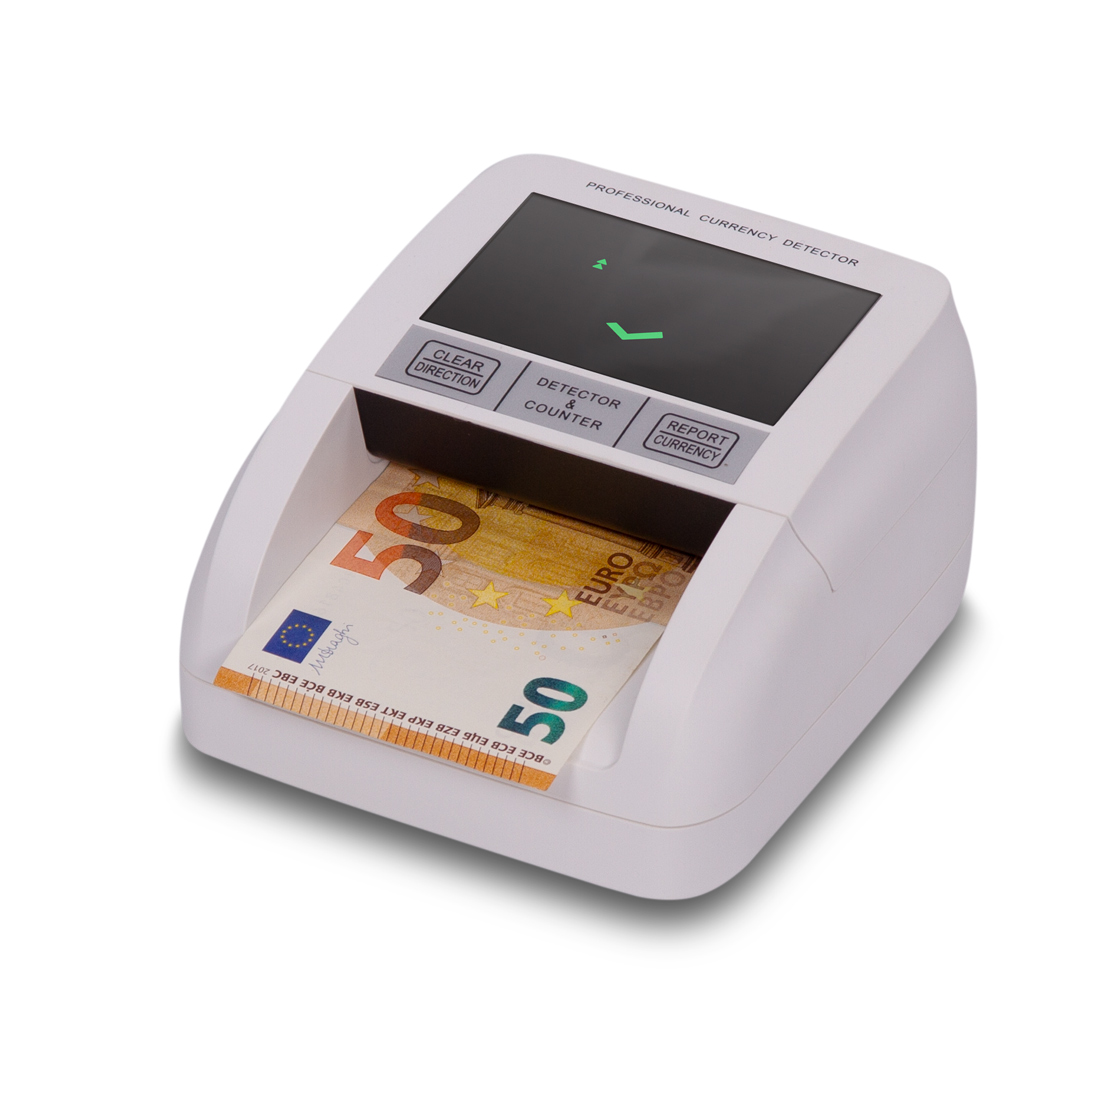 Counterfeit detector Pecunia BT 500 update